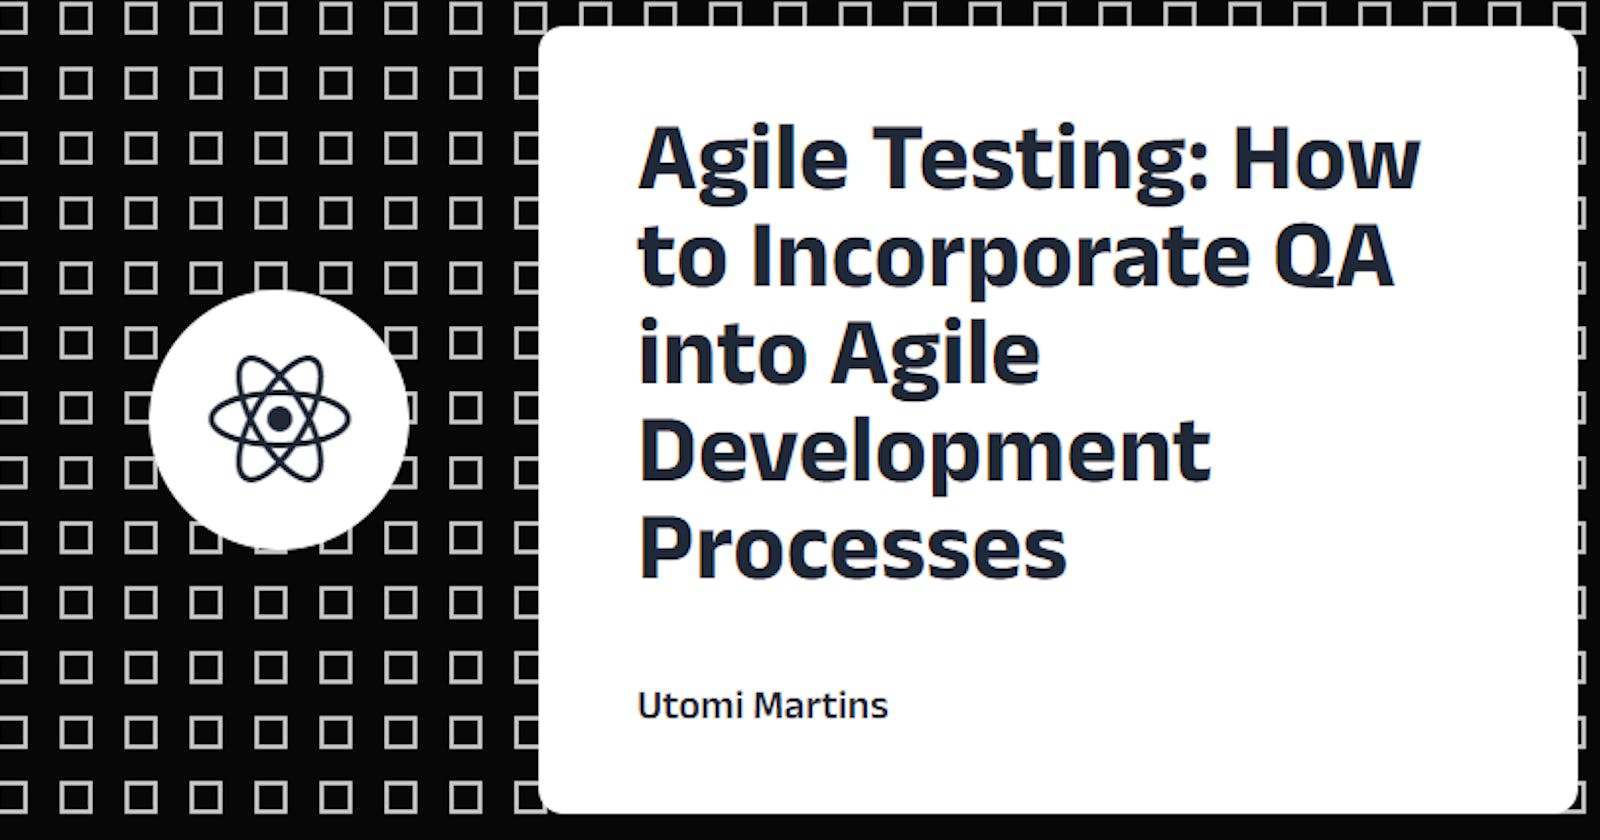 Agile Testing: How to Incorporate QA into Agile Development Processes